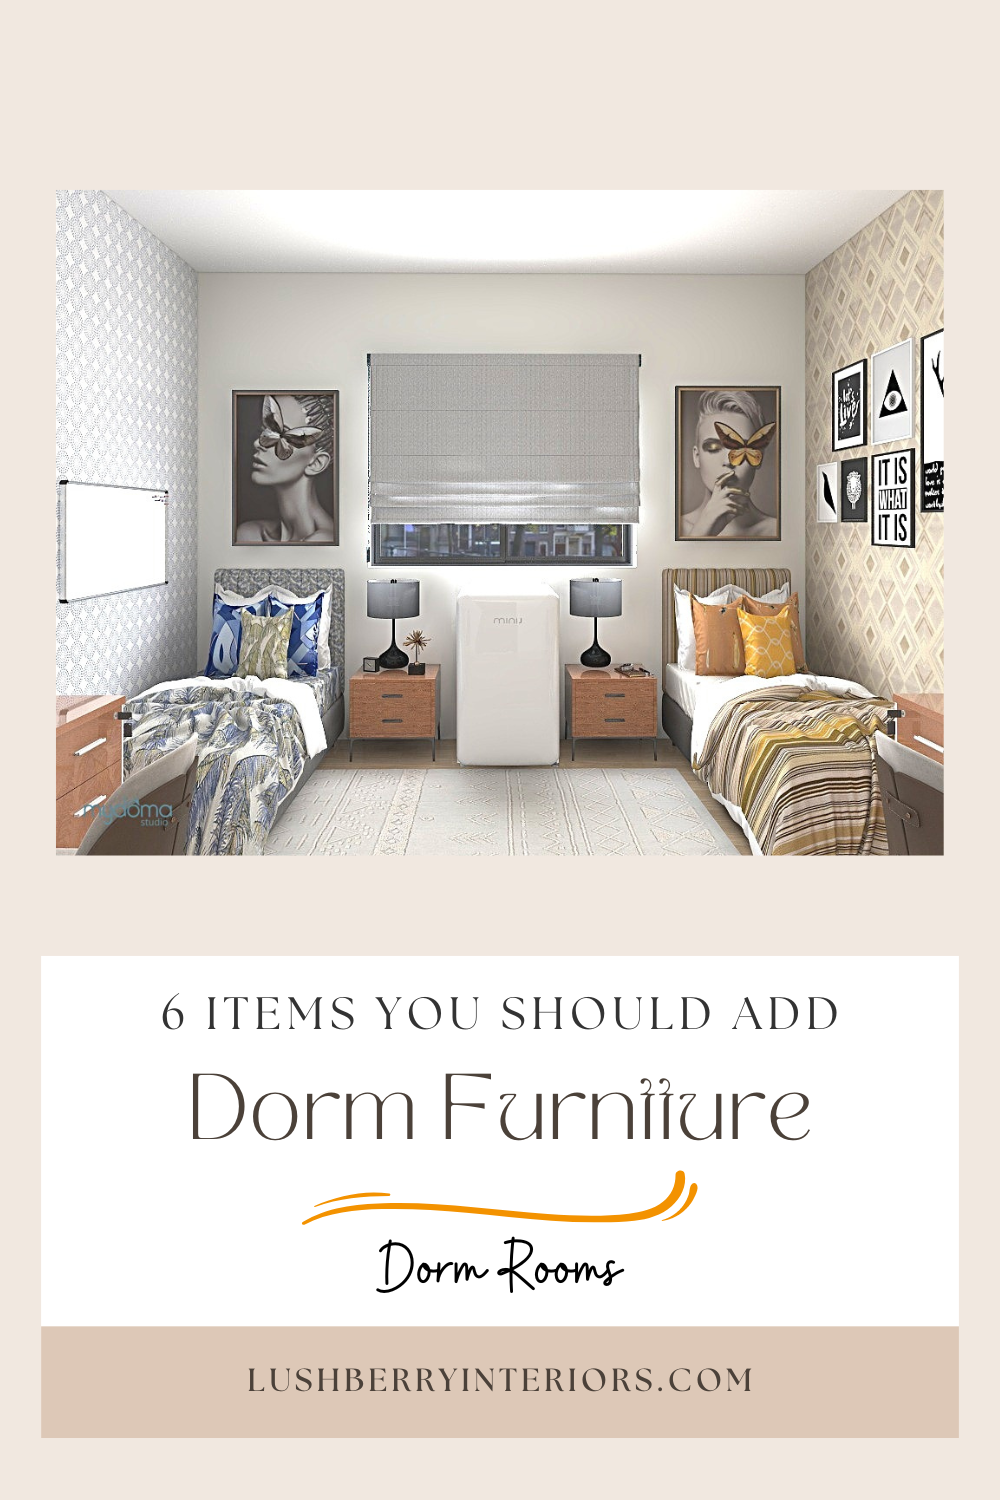 Dorm Furniture - 6 Items you should add